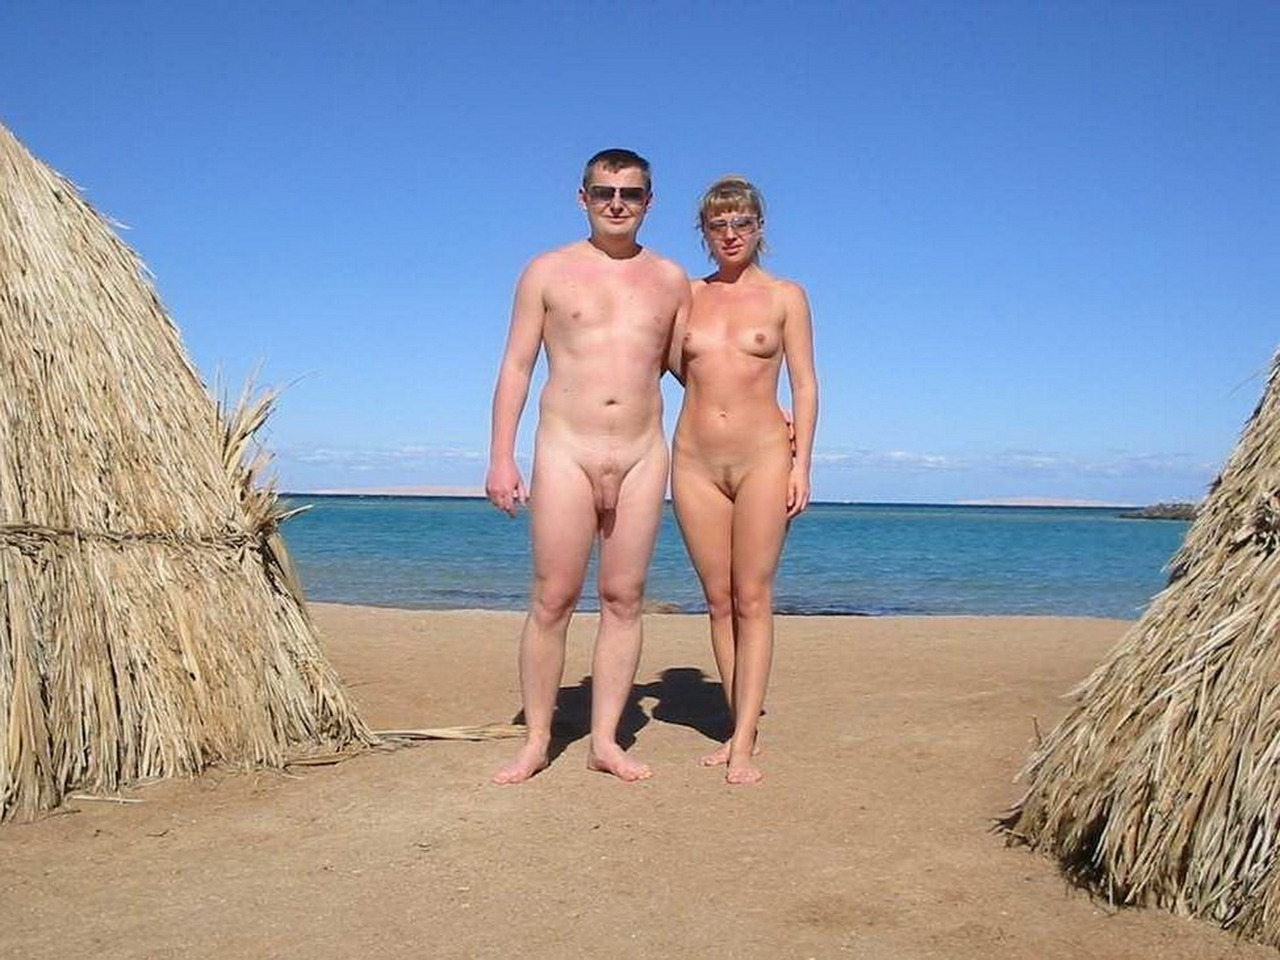 https://www.nudismlife.com/galleries/nudists_and_nude/nudists_couple/nudists_nude_naturists_couple_1080.jpg